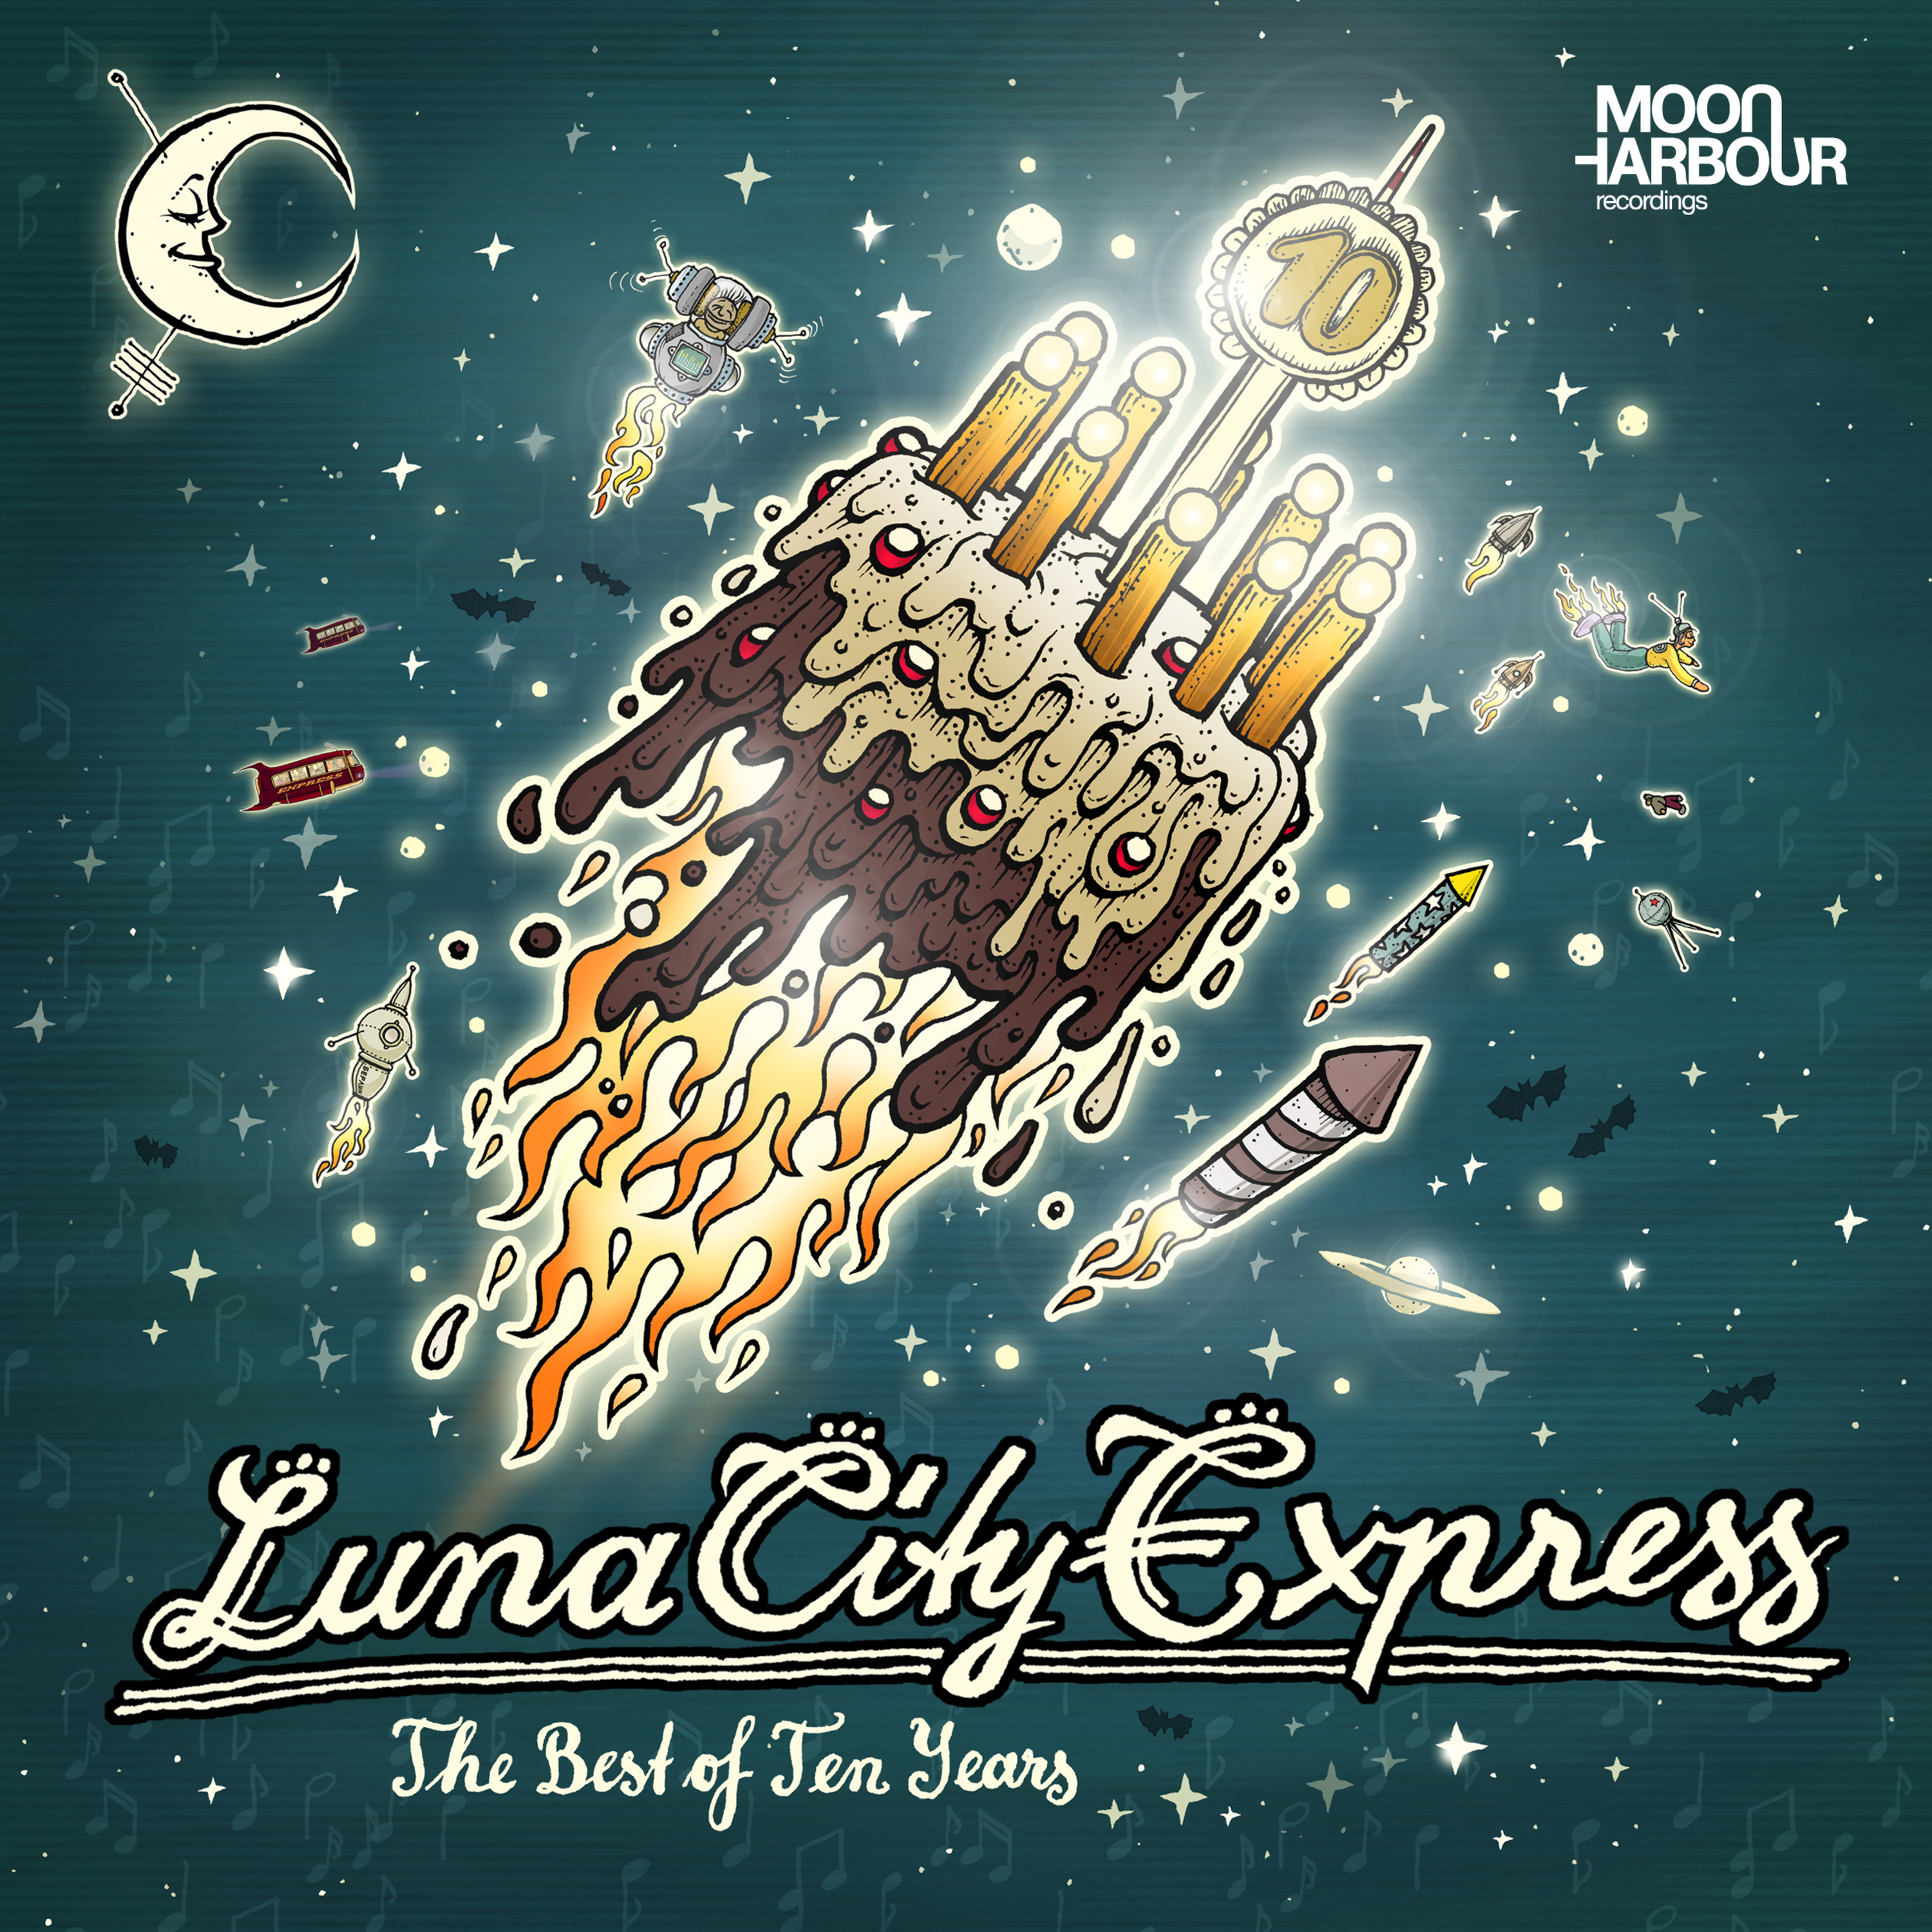 Rec-Chord (Luna City Express Remix)